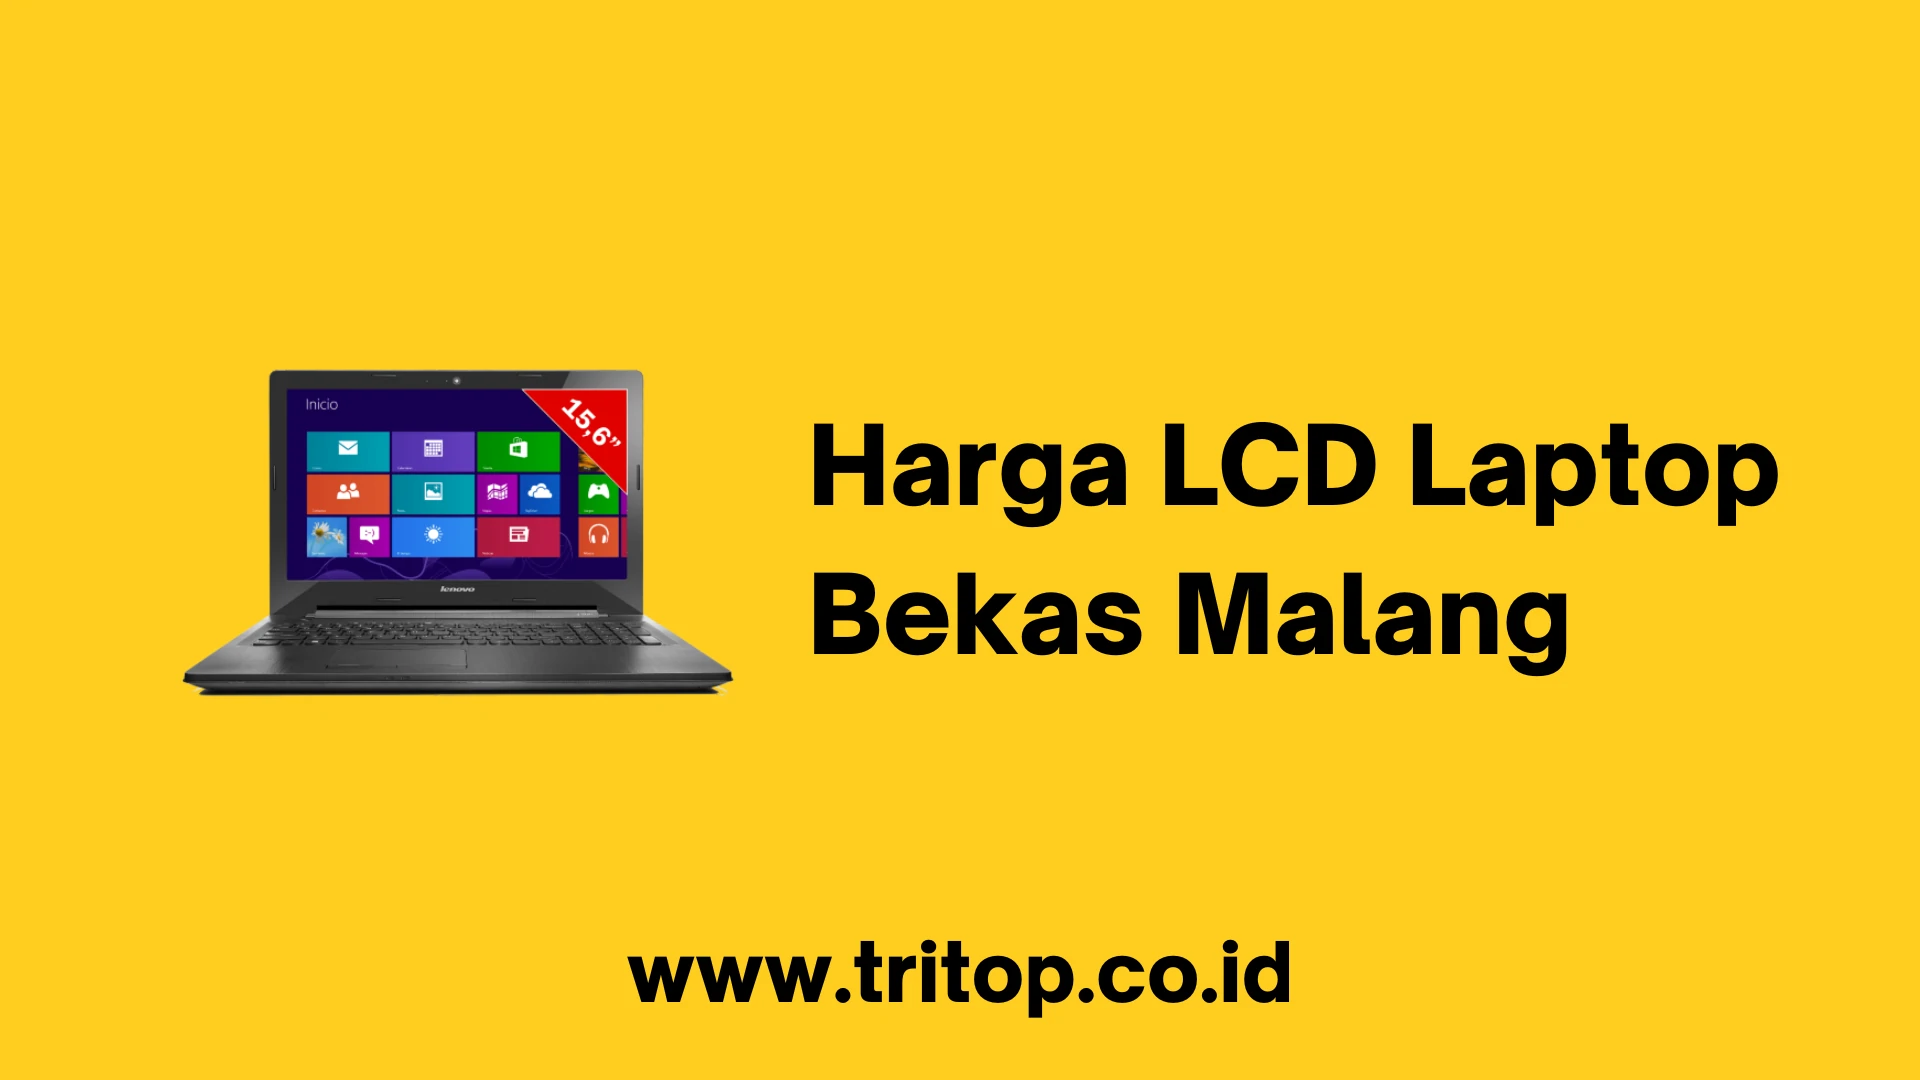 Harga LCD Laptop Bekas Malang